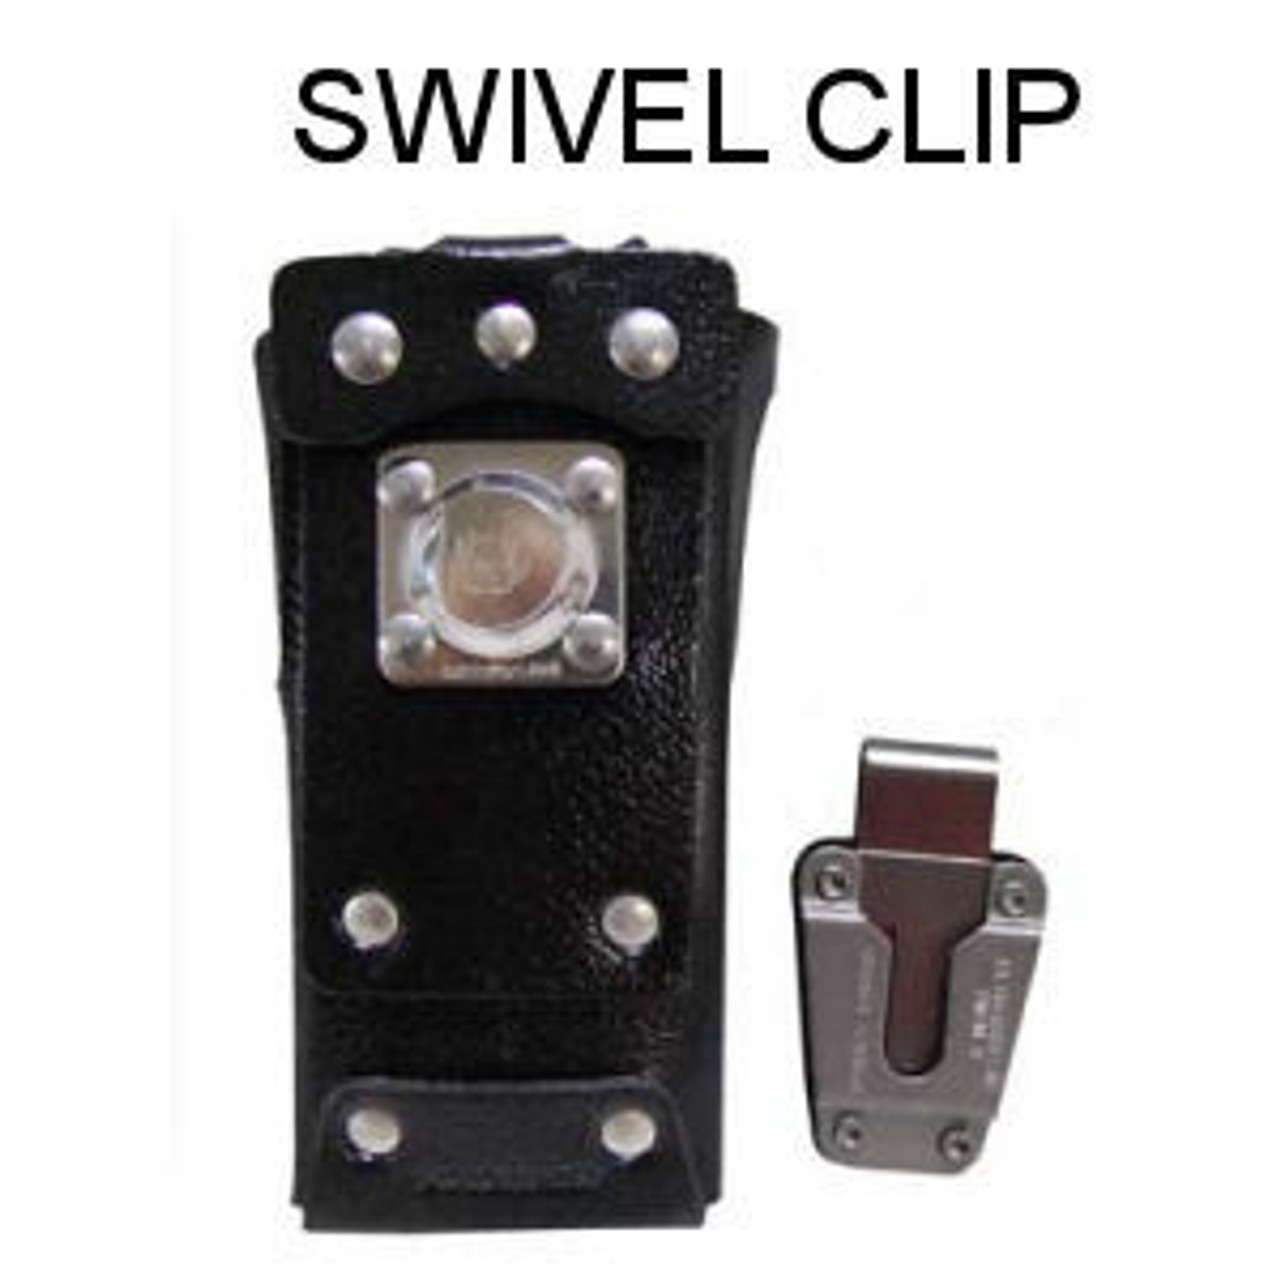 M/A-Com P7300 Custom Radio Case With Swivel Clip